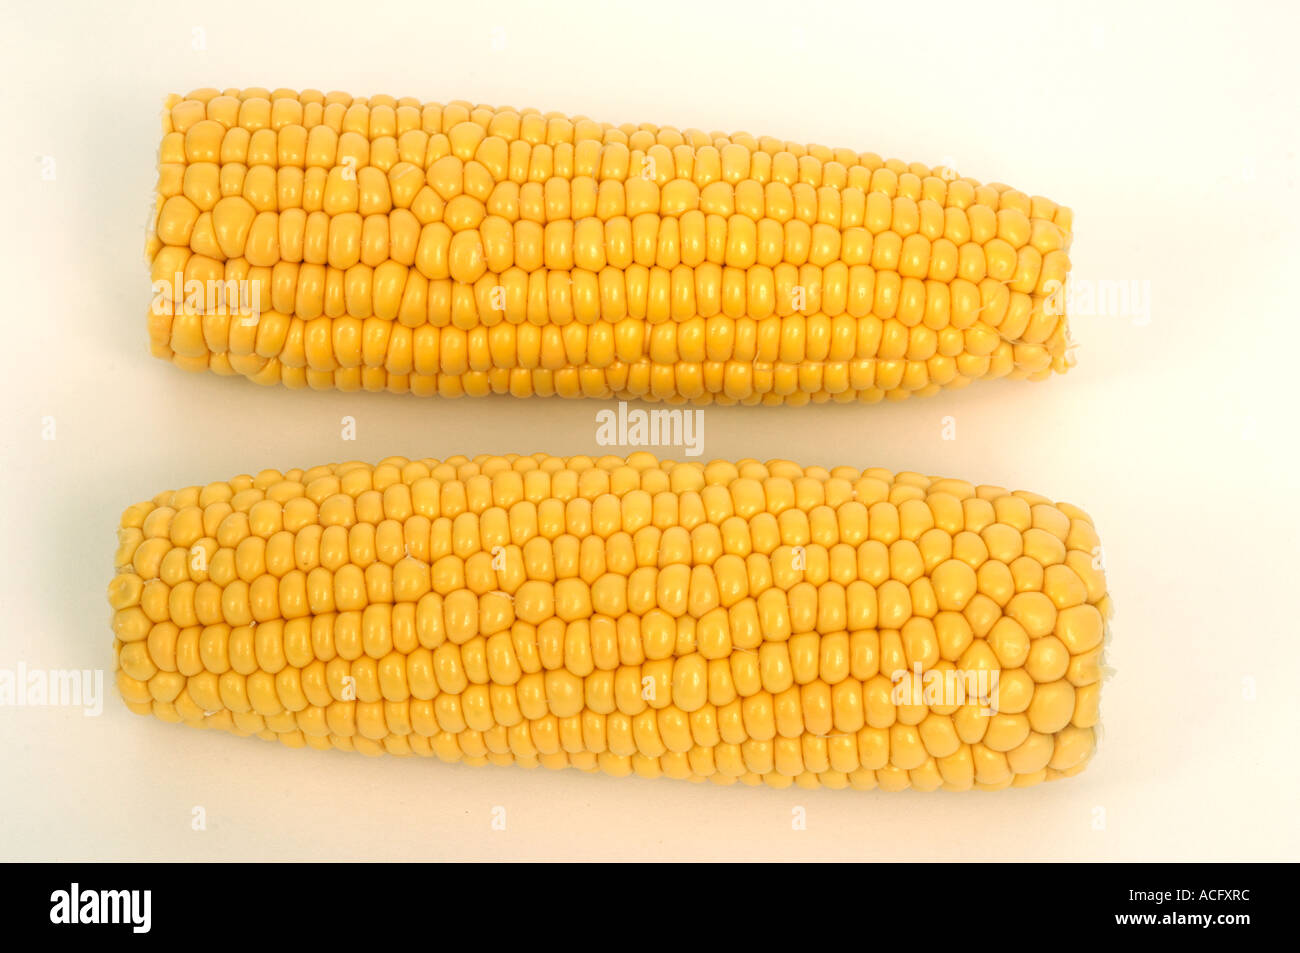 Productos vegetales supermercado compraron cortar mazorcas de maíz cortado Foto de stock